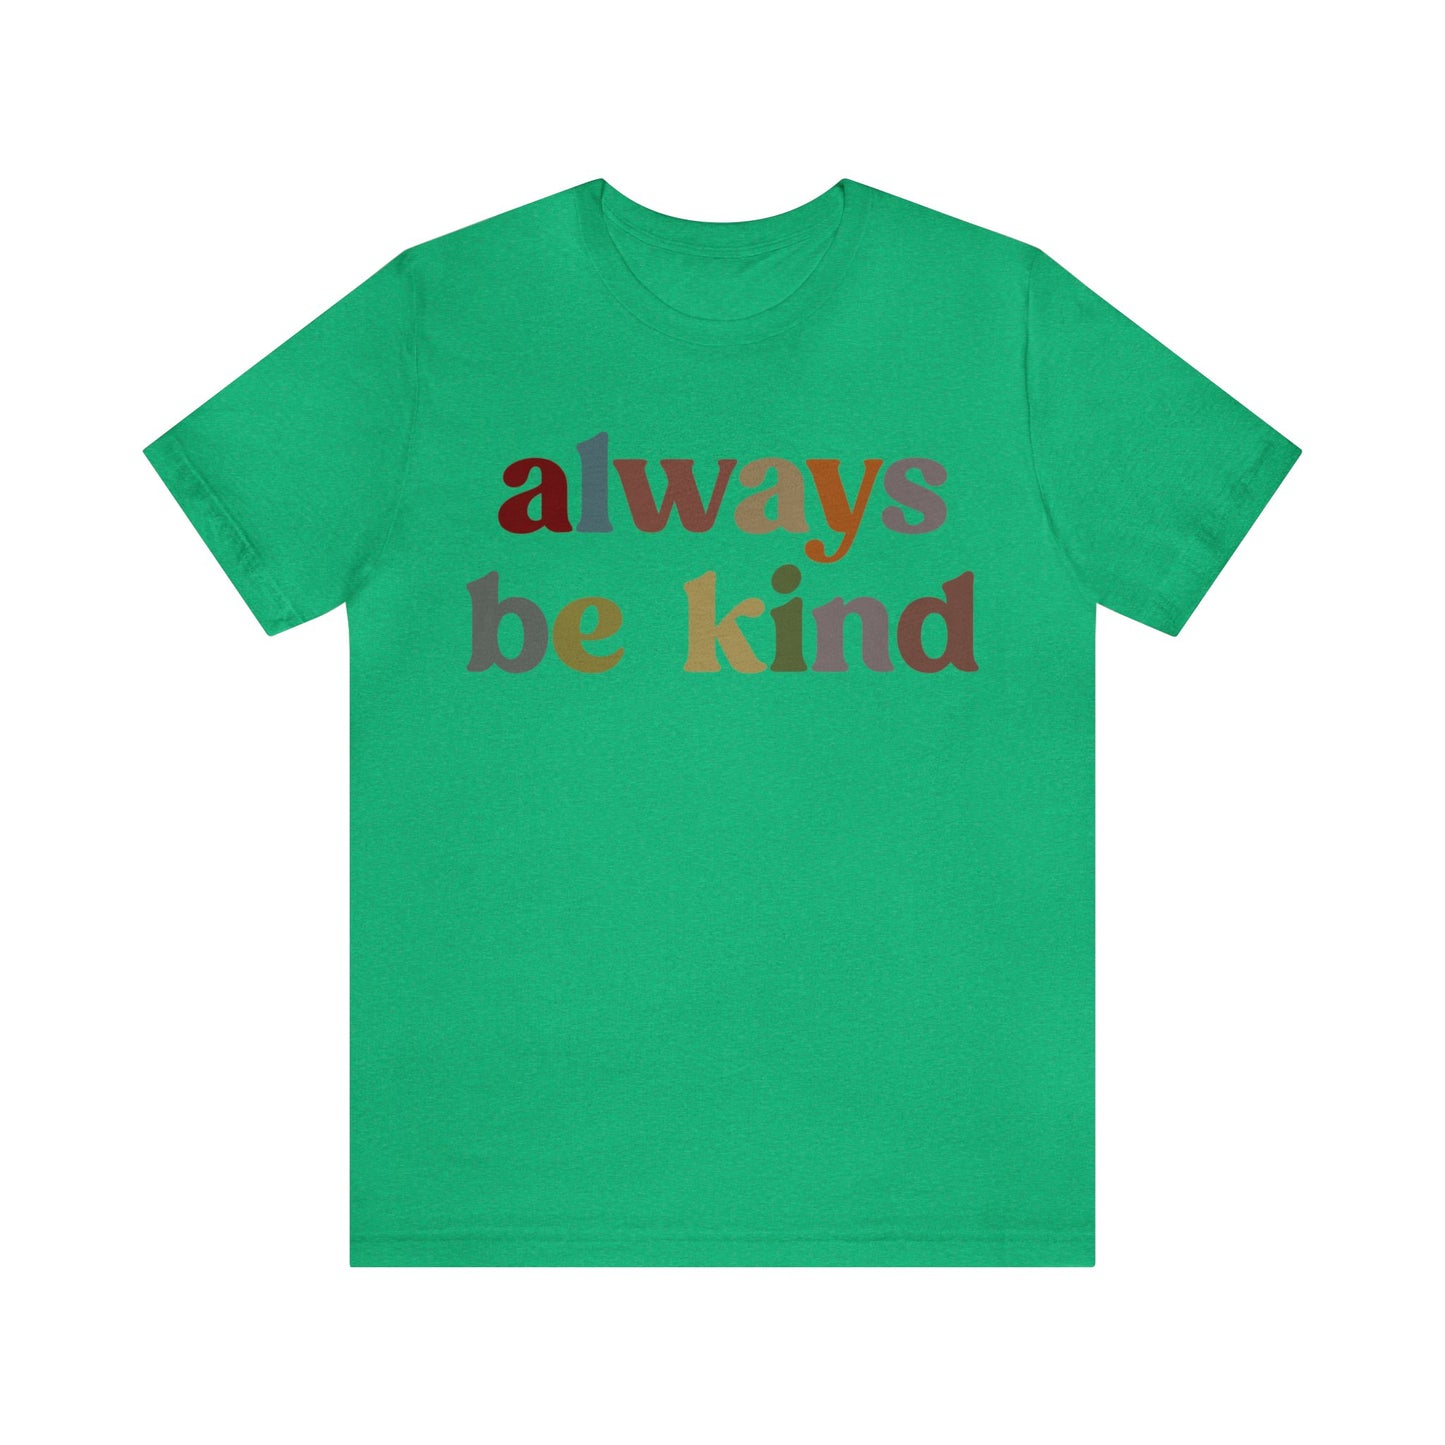 Always Be Kind Shirt, Positivity Shirt, Kind Mom Shirt, Be a Kind Human Shirt, Cute Inspirational Shirt, Kindness Shirt, T1372